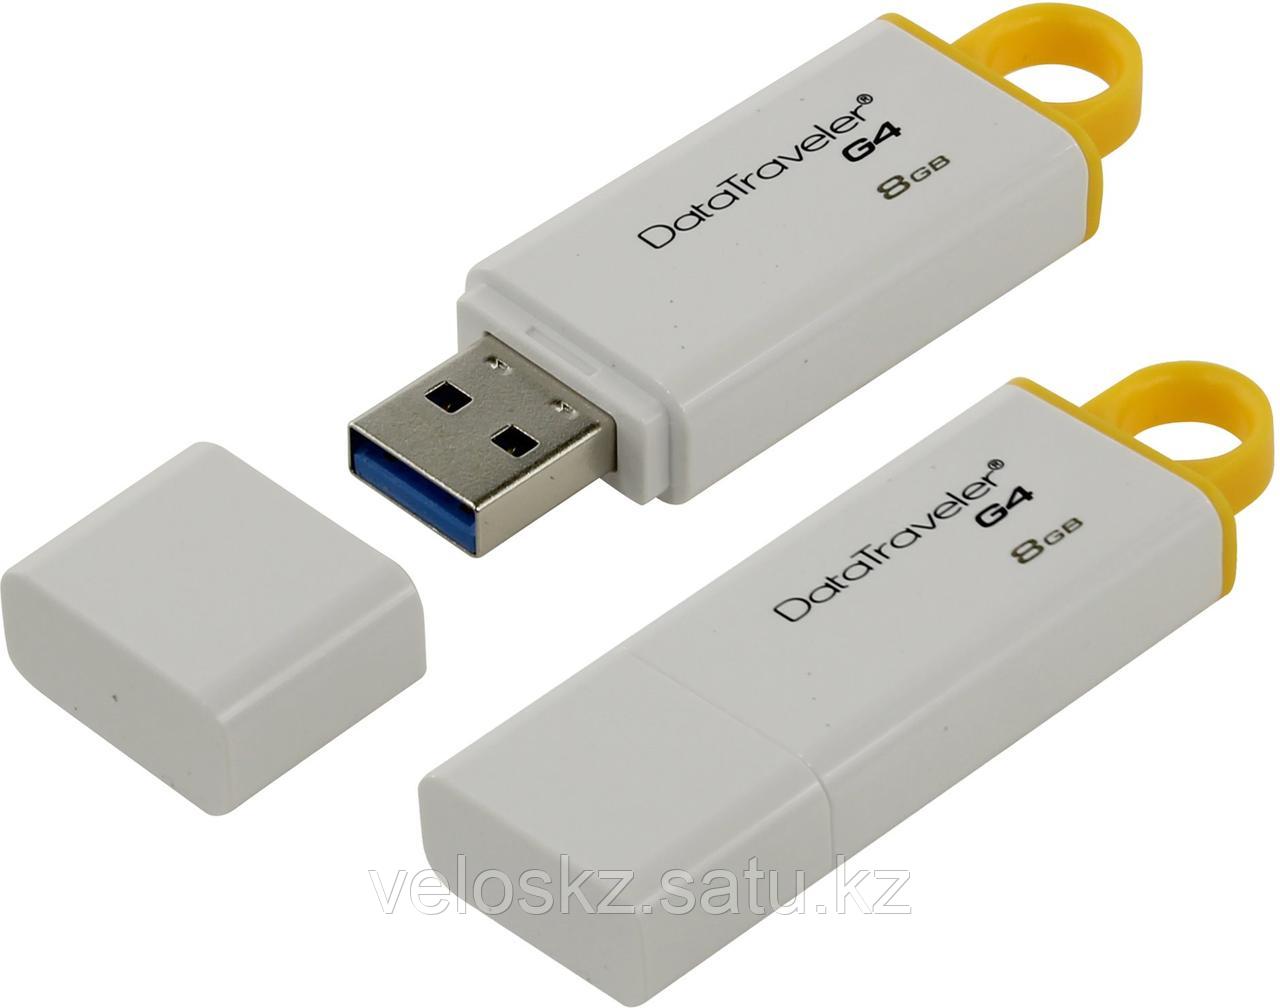 Kingston DTIG4/32GB, 32Гб, USB 3.0